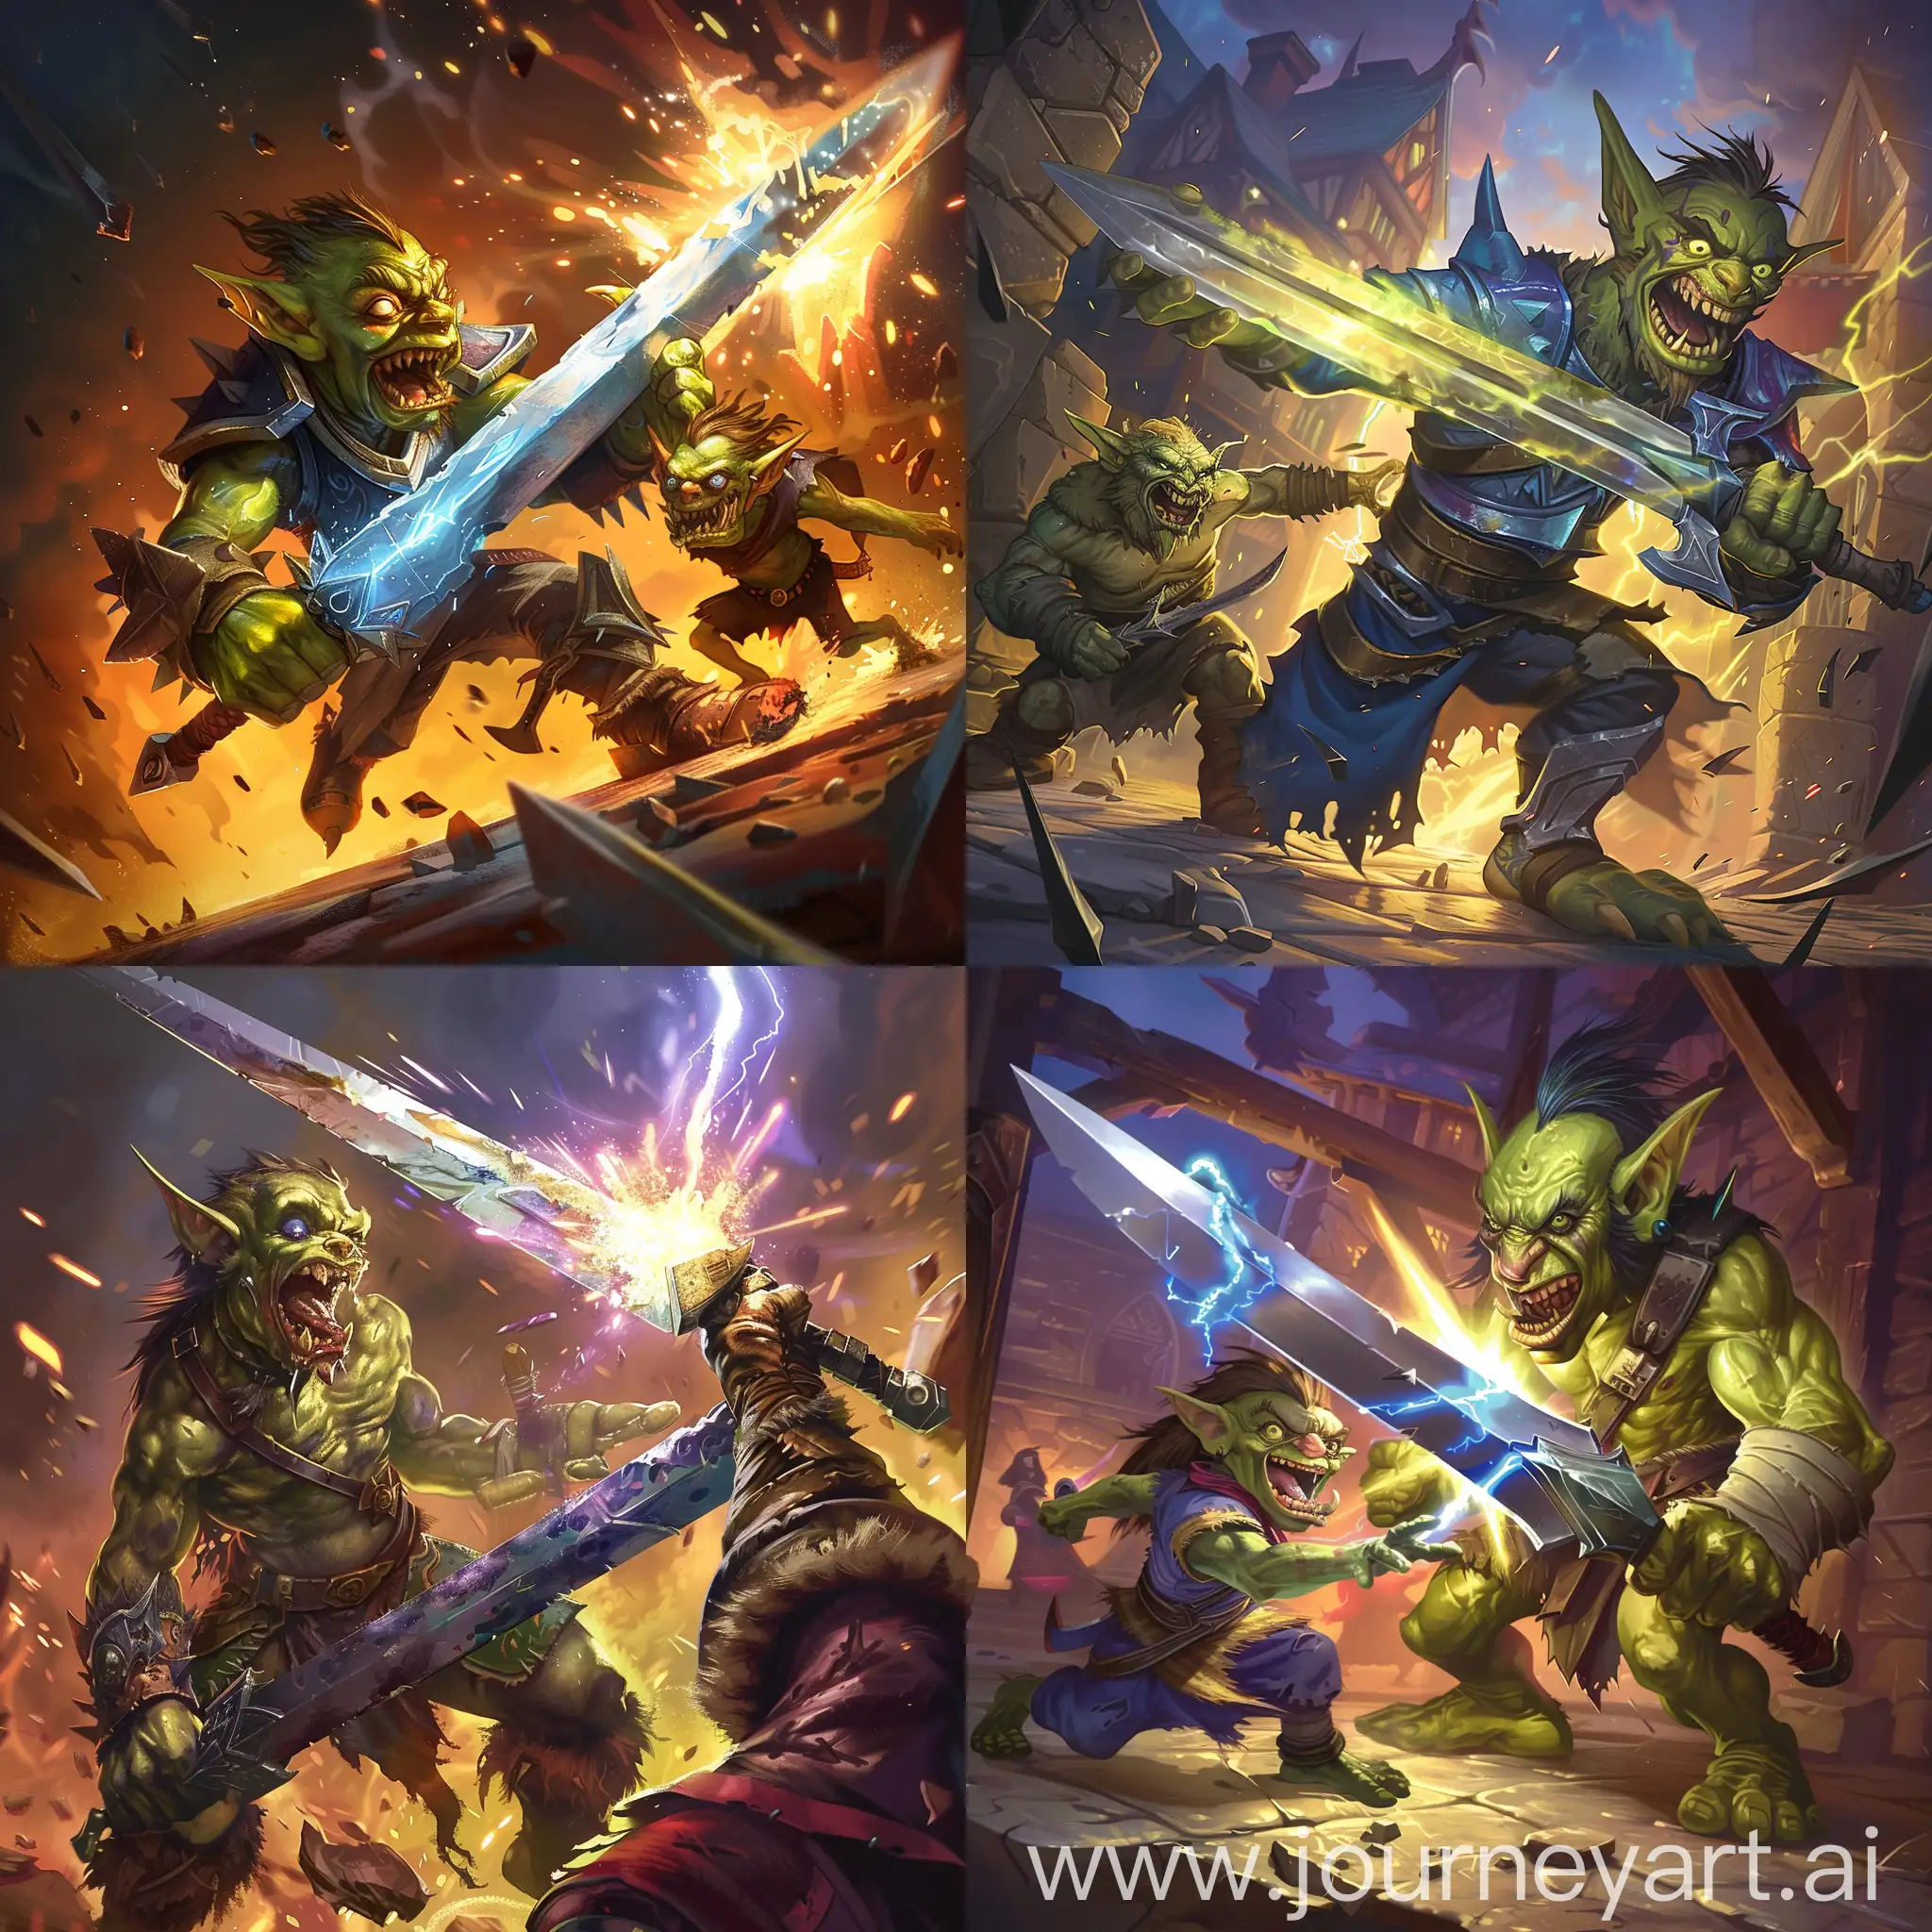 Epic-Sword-Clash-with-Goblin-Mythical-Battle-Scene-Art